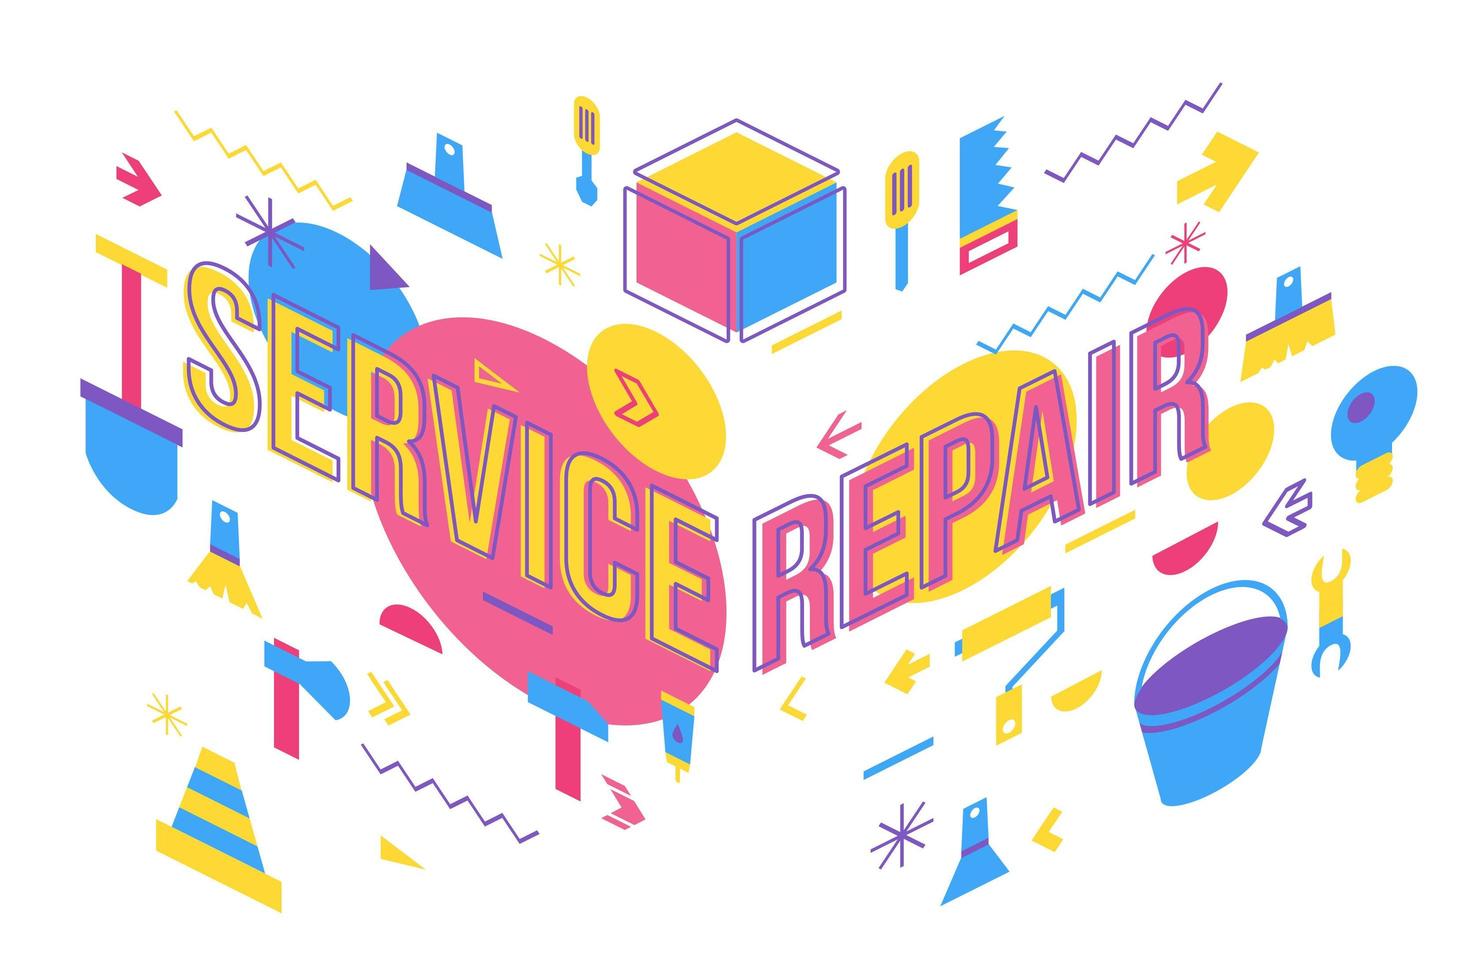 Service repair word concept banner design vector